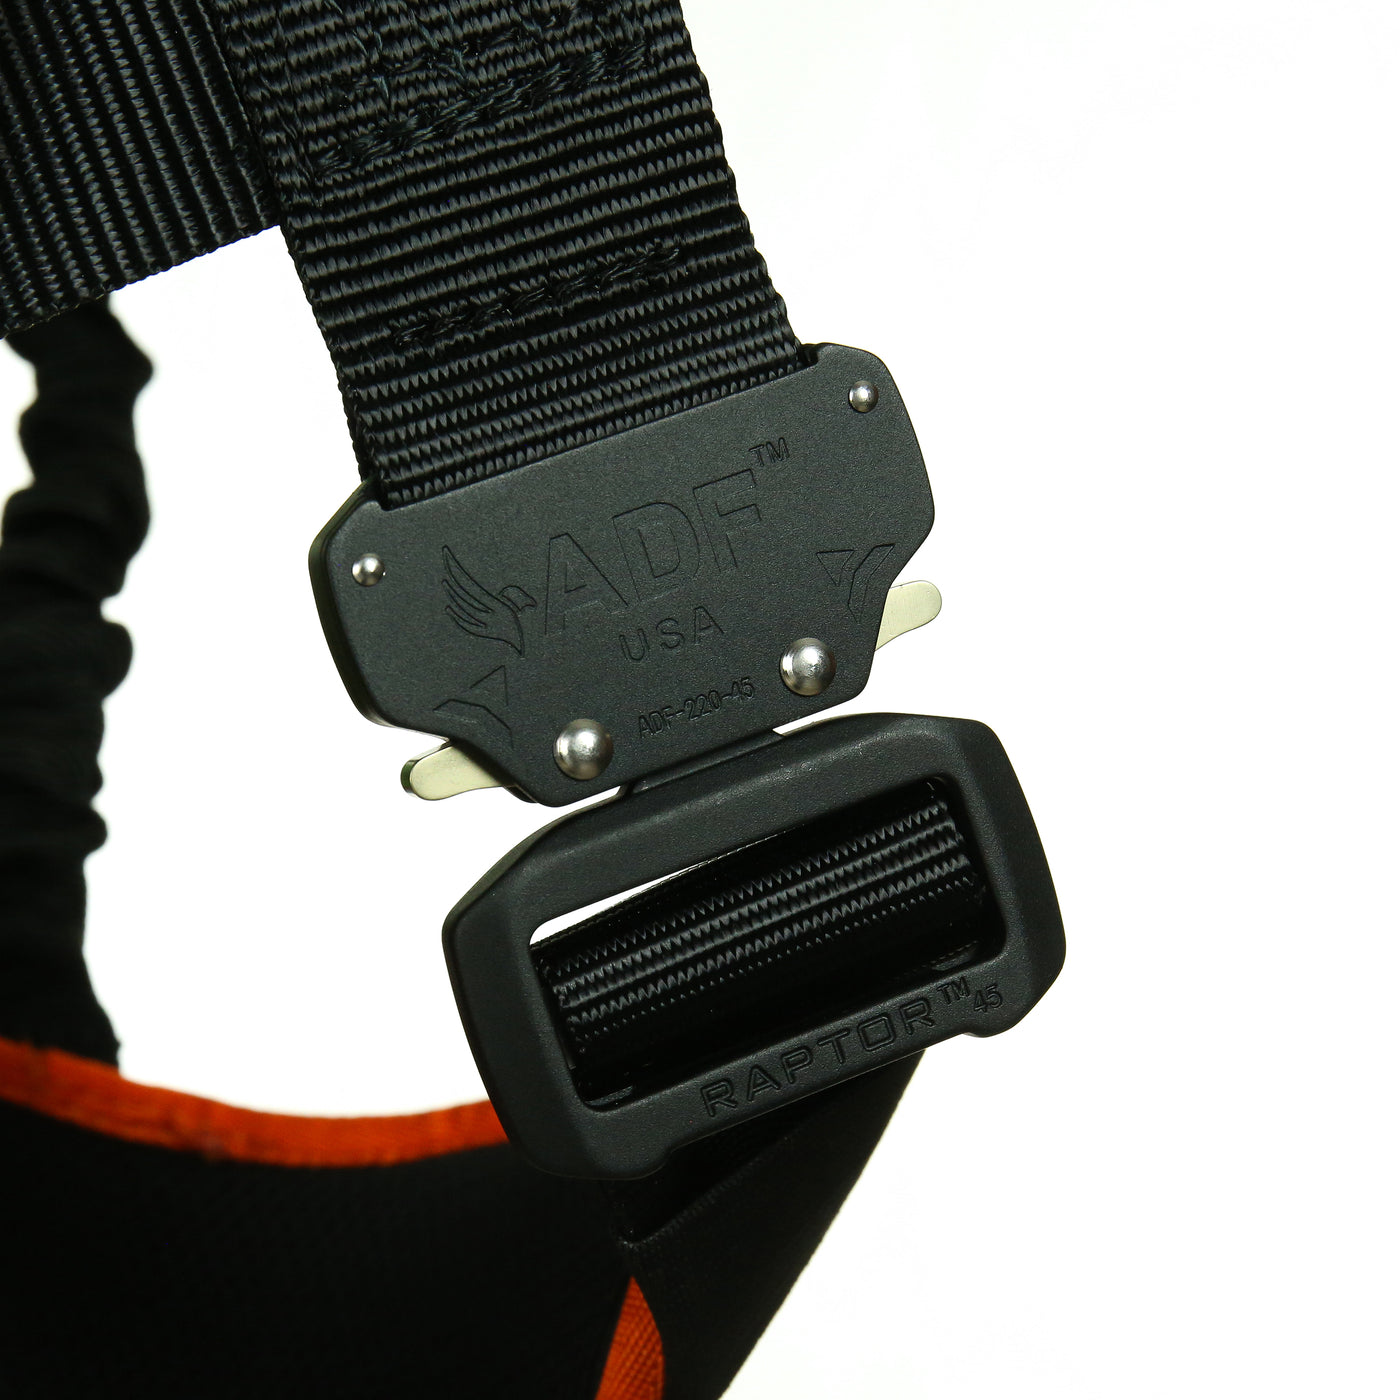 PRESTO X FIT GYM System Harness - Black/Orange